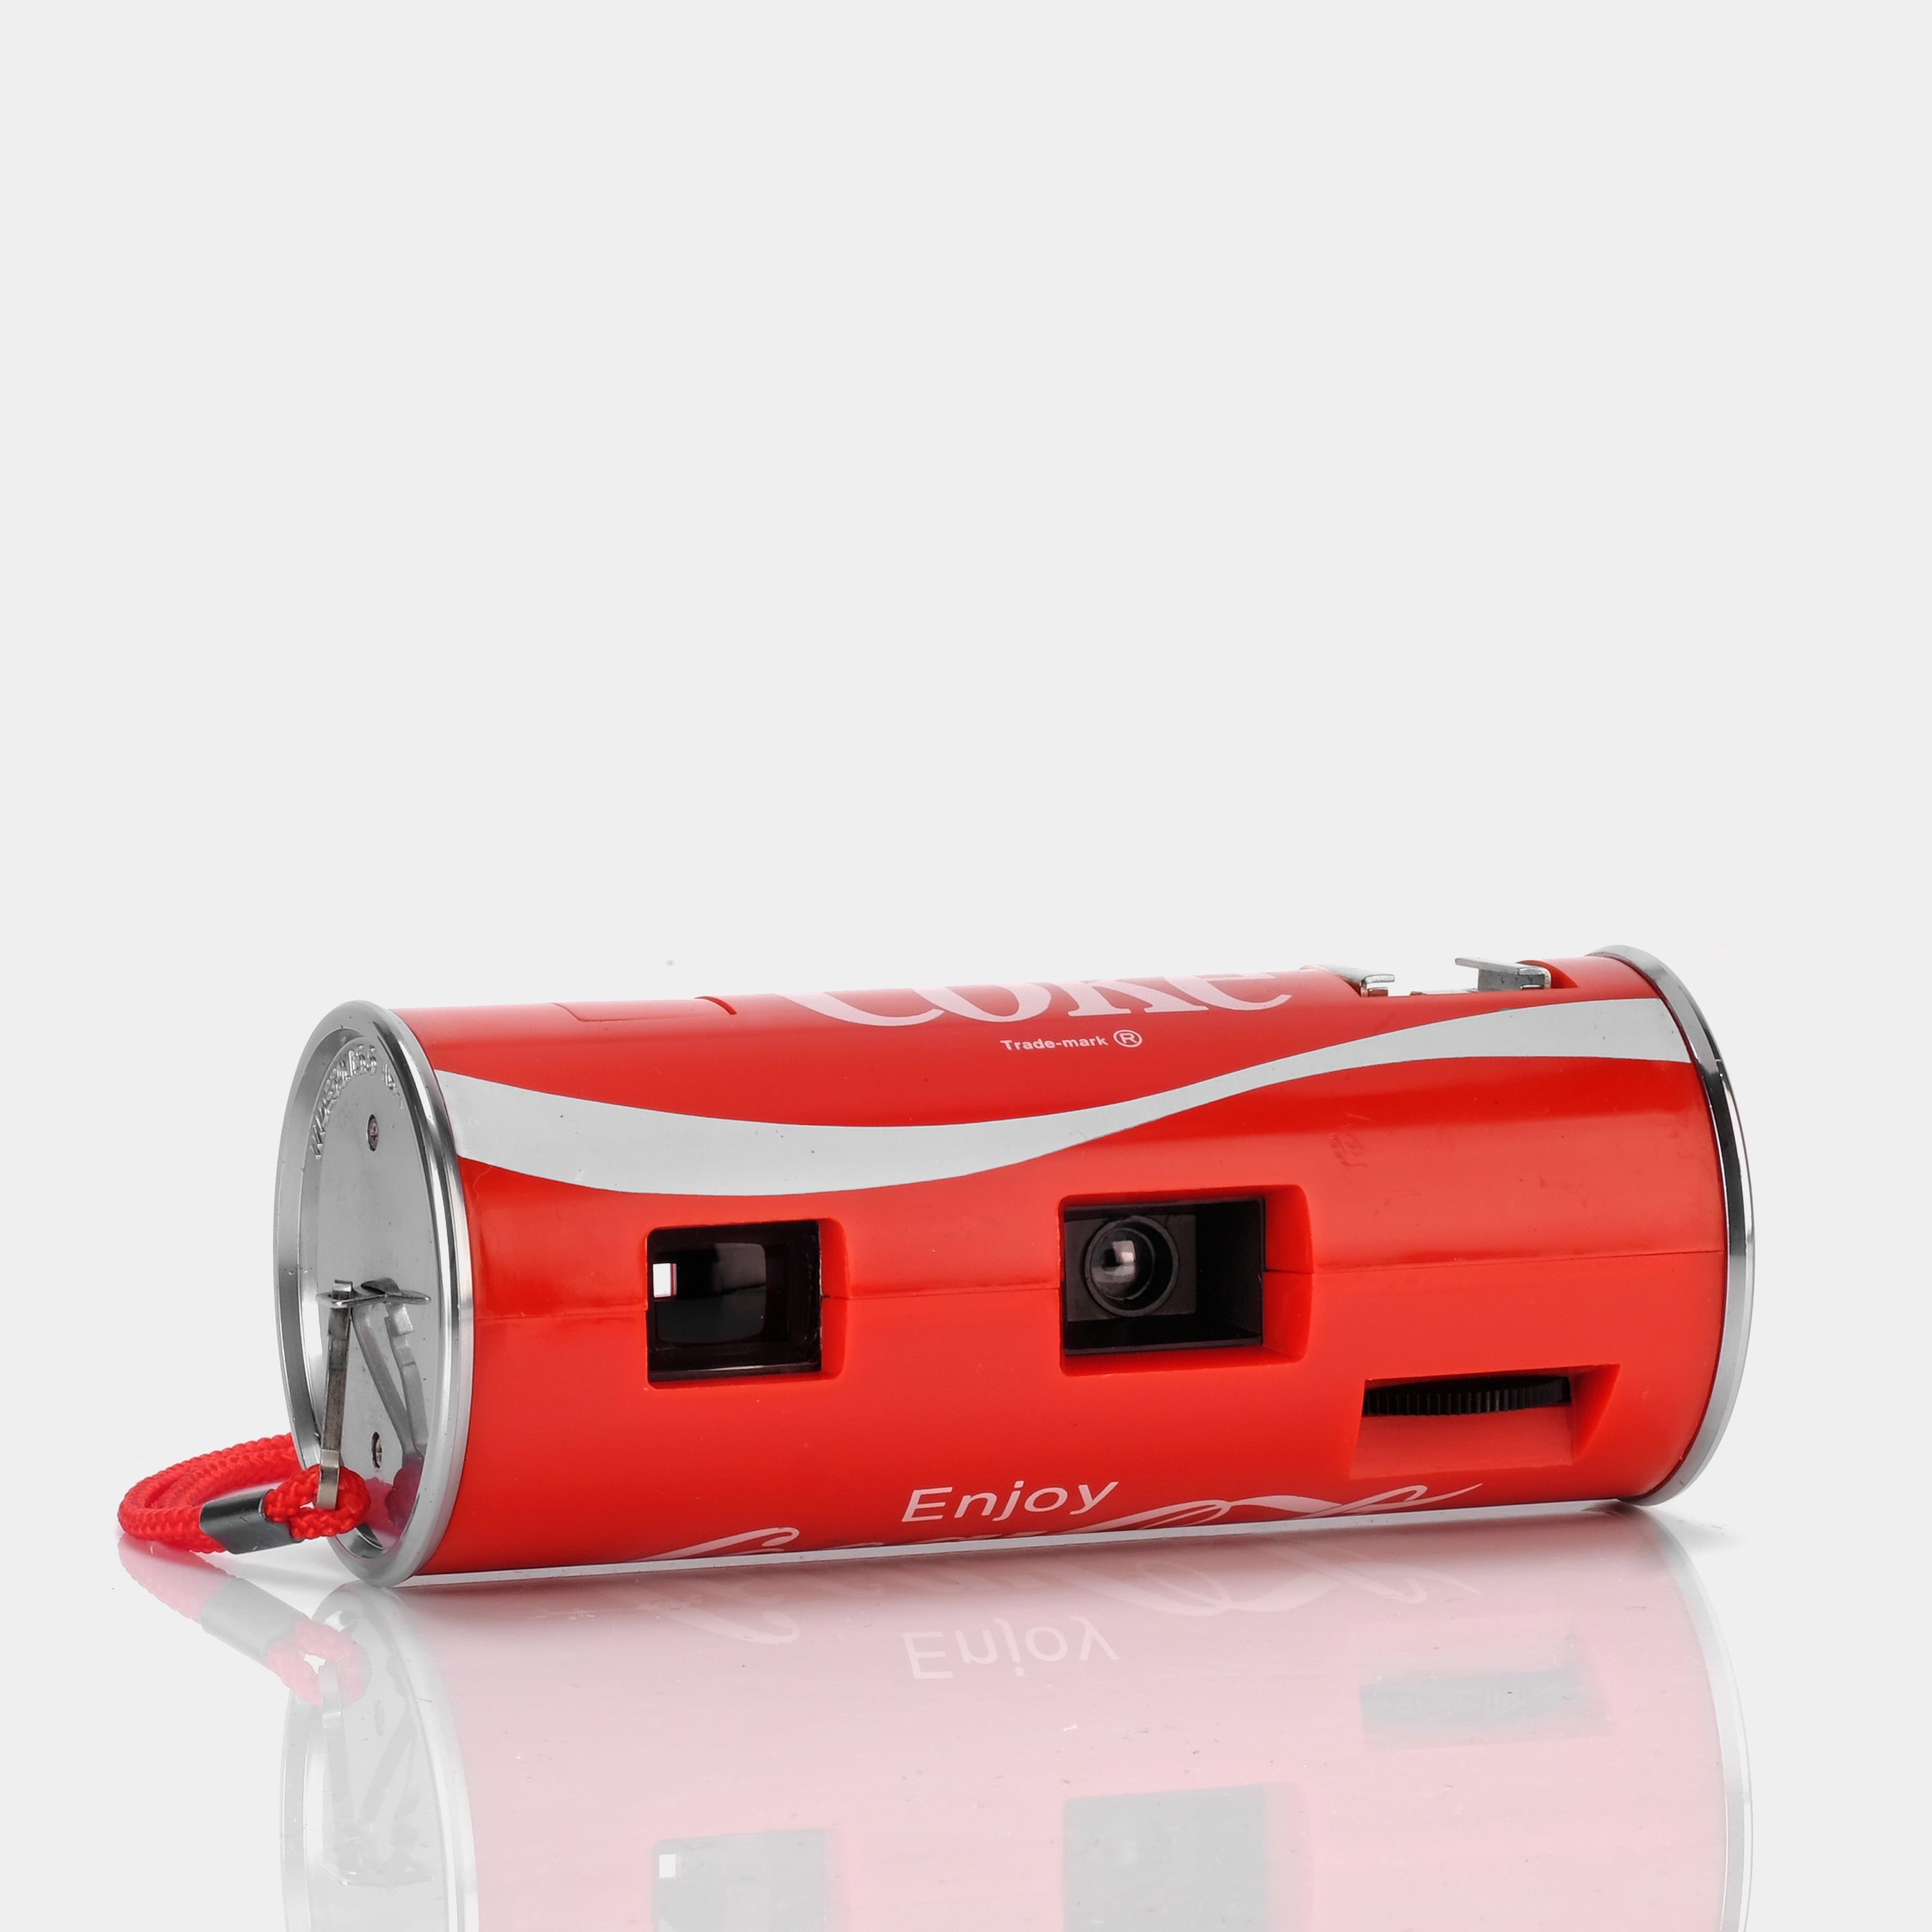 Coca Cola 110 Format Film Camera